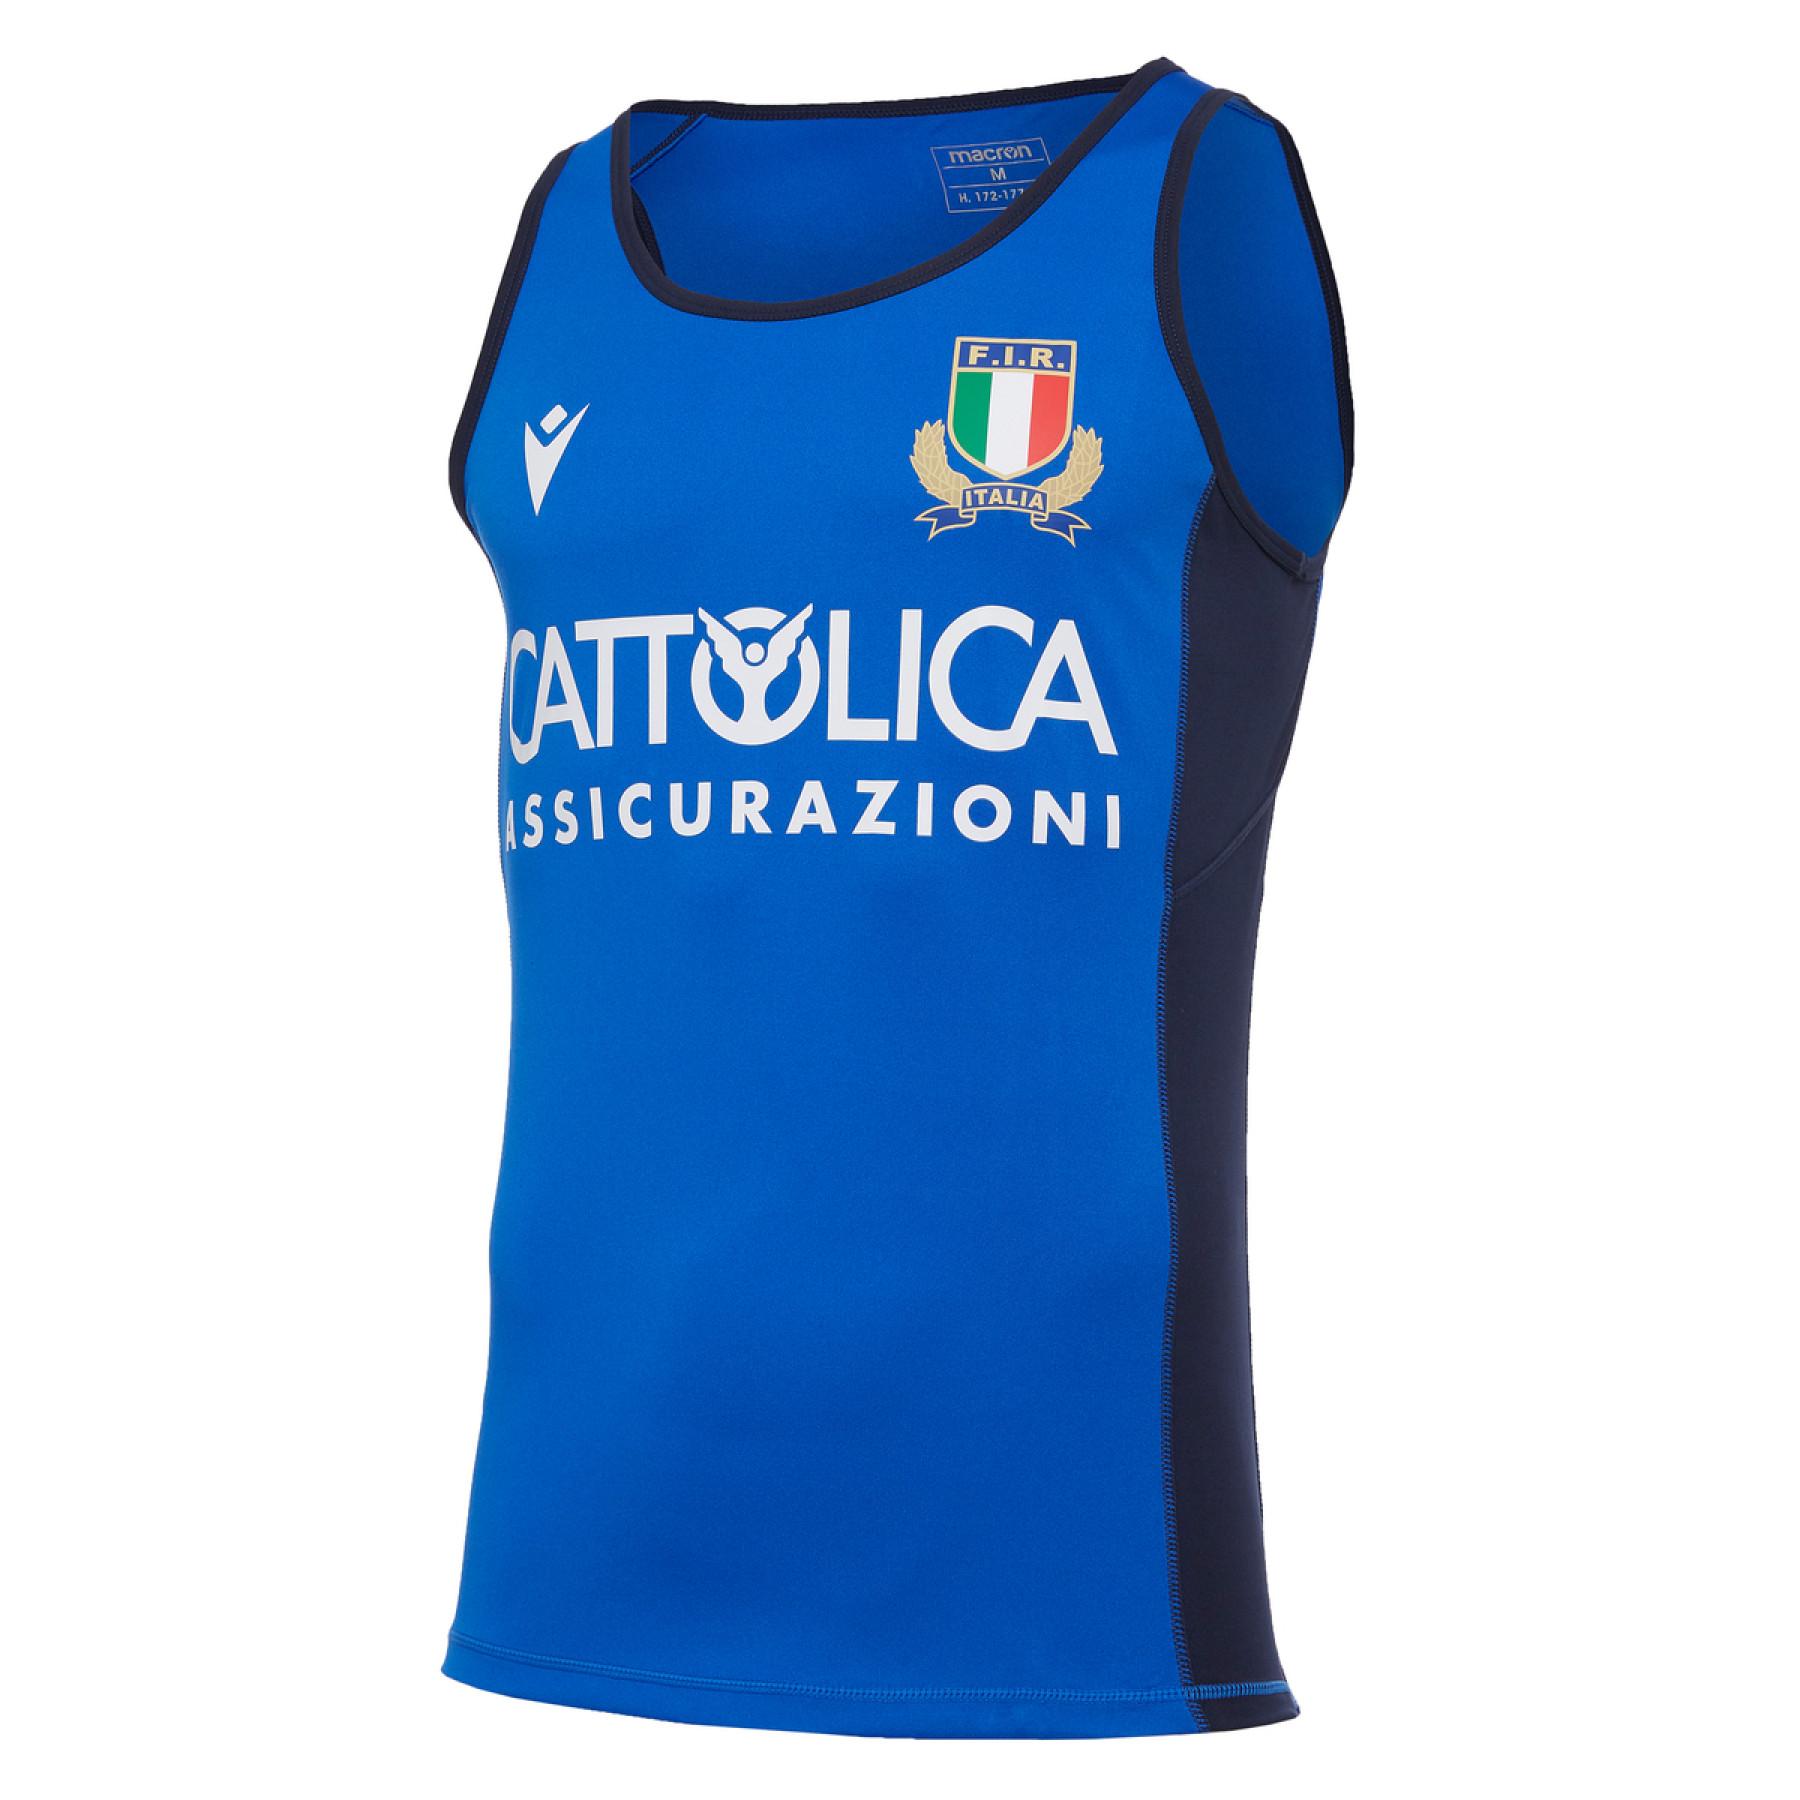 Camisola sem mangas Italie rugby 2020/21